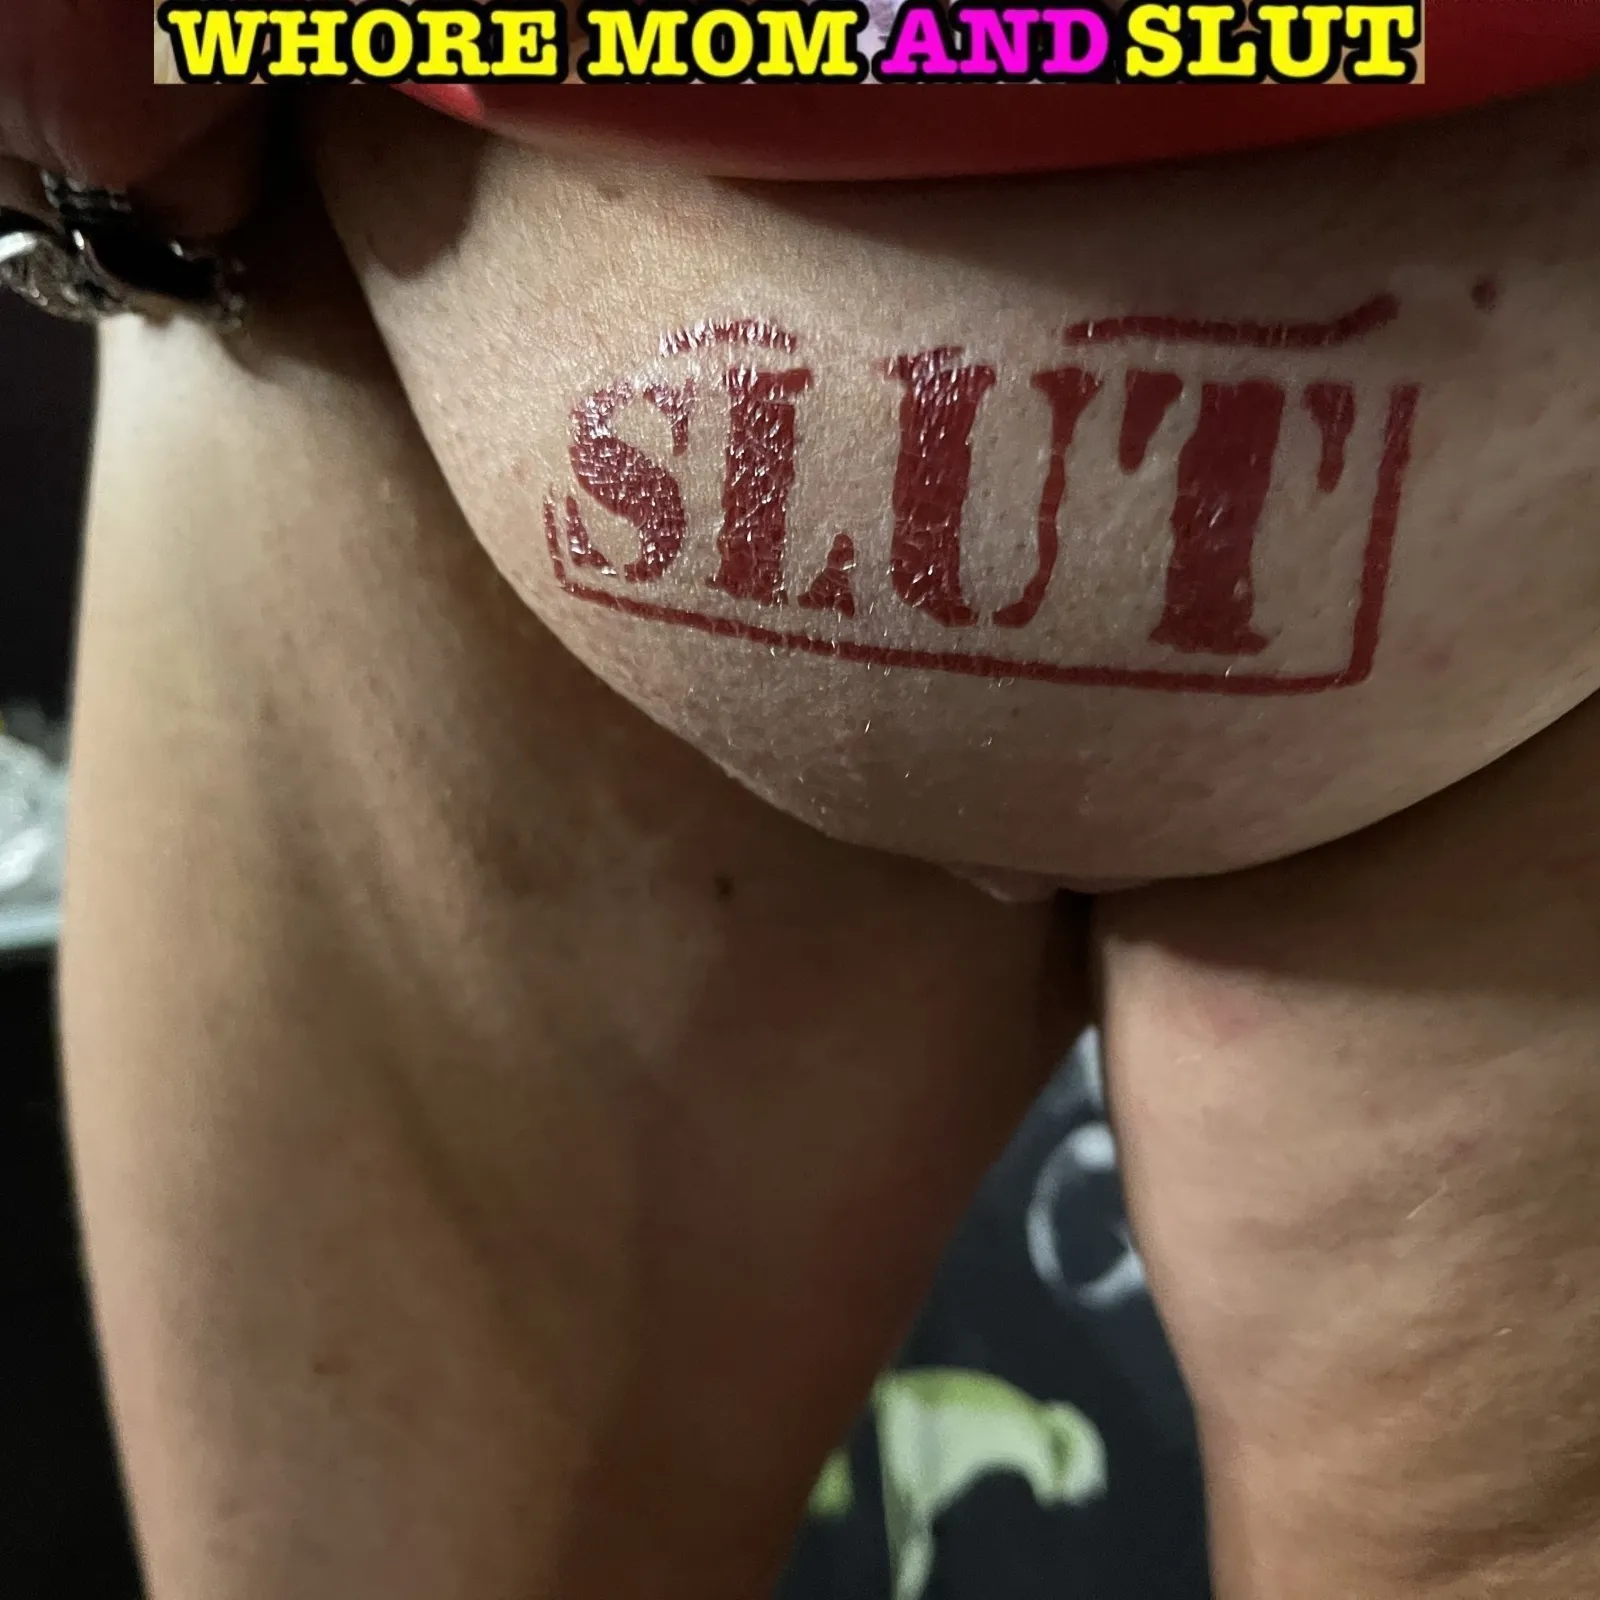 SHIRLEY WHORE MOM AND SLUT